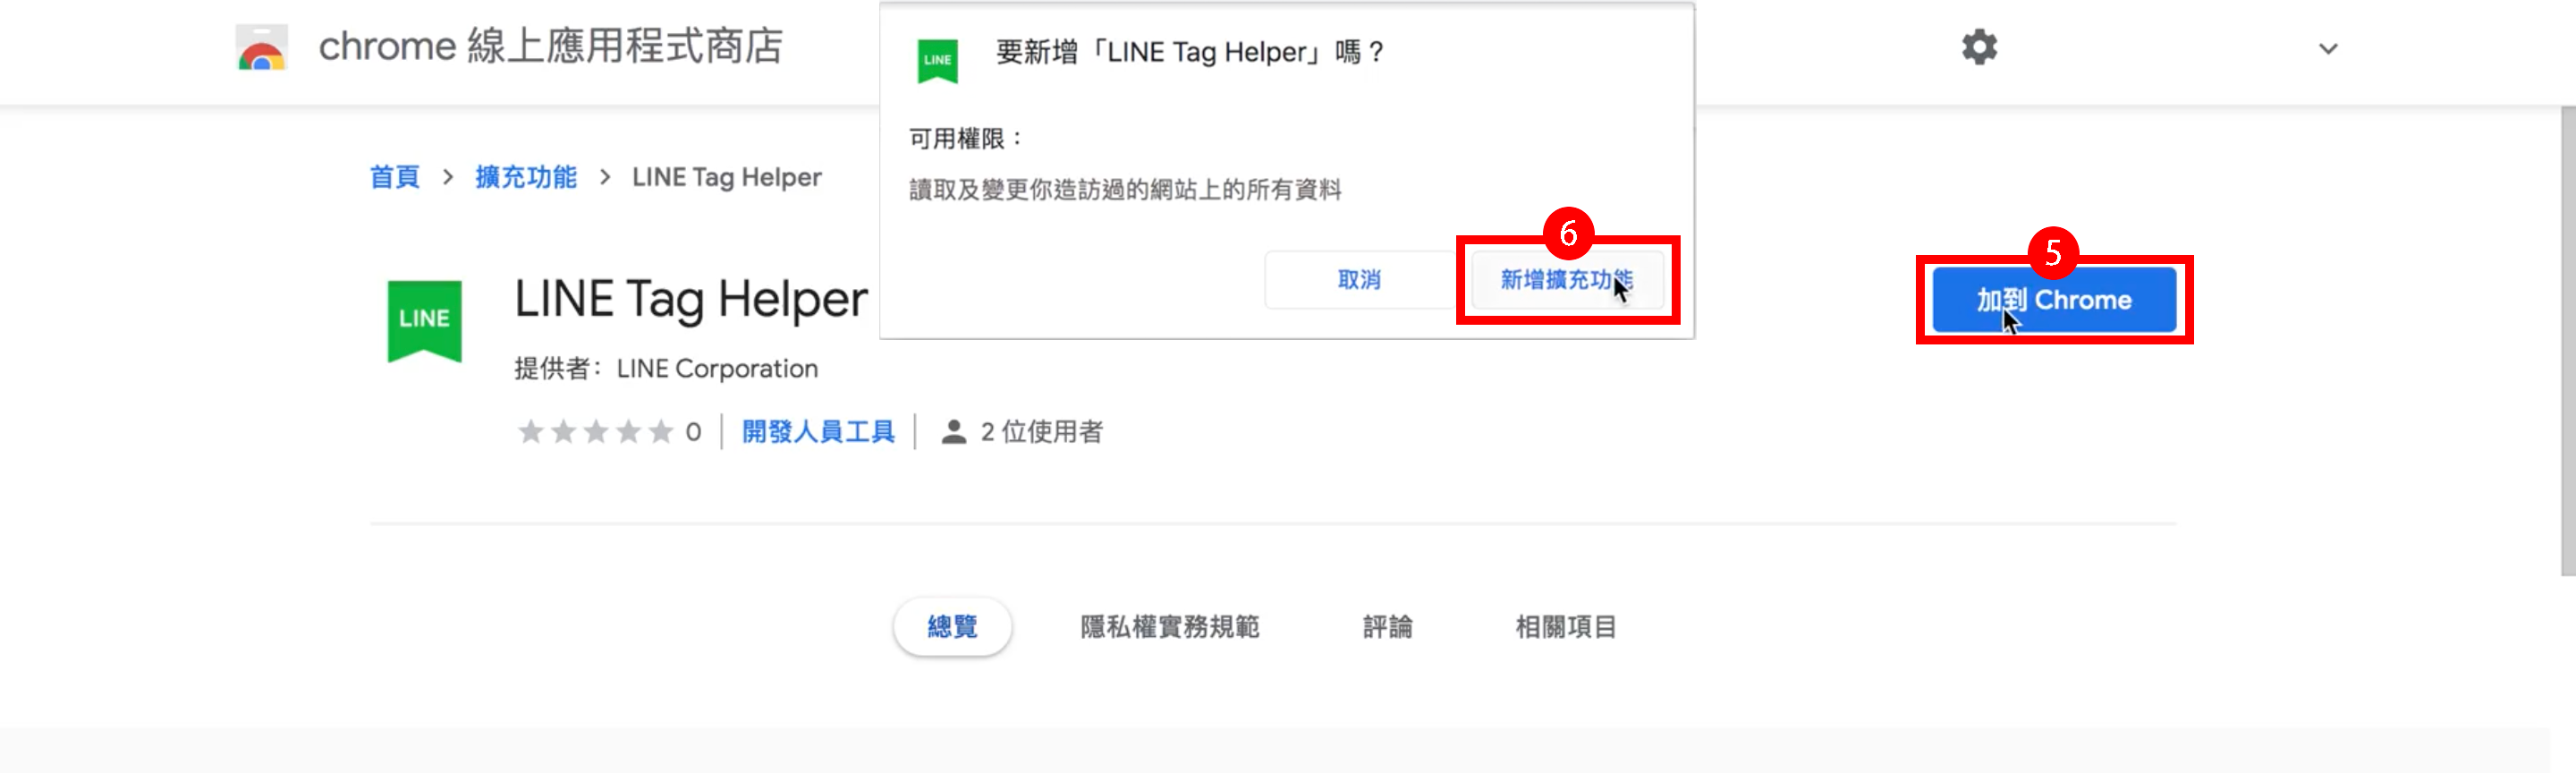 LINE Tag Helper 如何安裝？
主畫面上點選「加到 Chrome」，點選「新增擴充功能」即可開始進行擴充功能的安裝